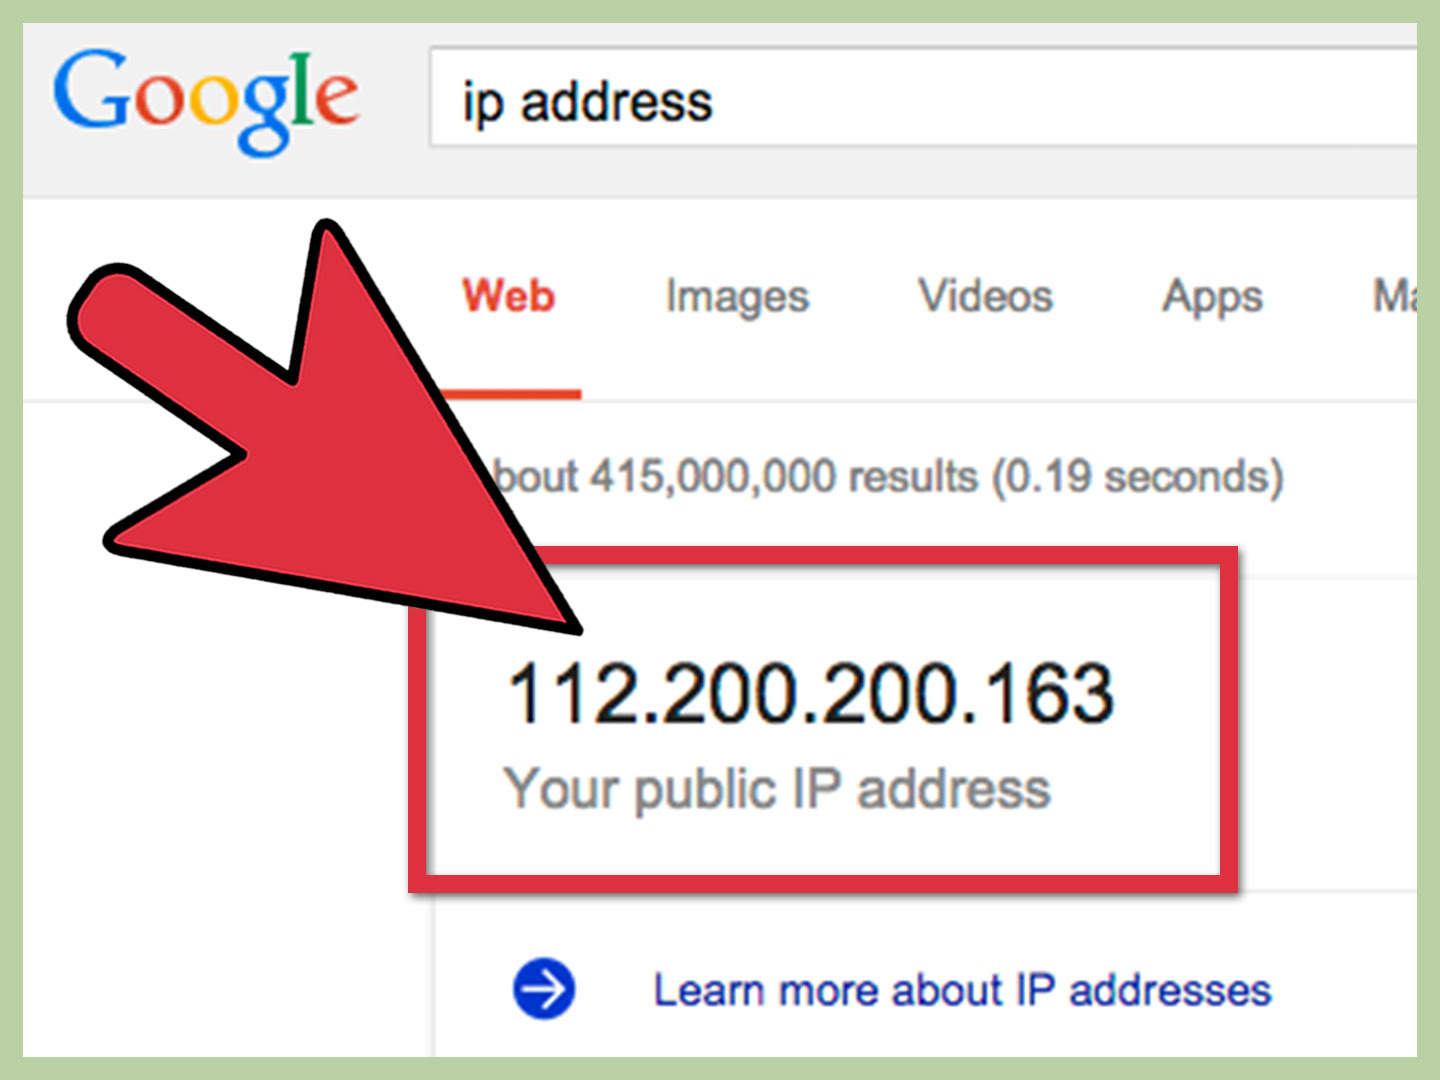 Ip youtube. My IP address. IP address location. Web address. What's your IP address.